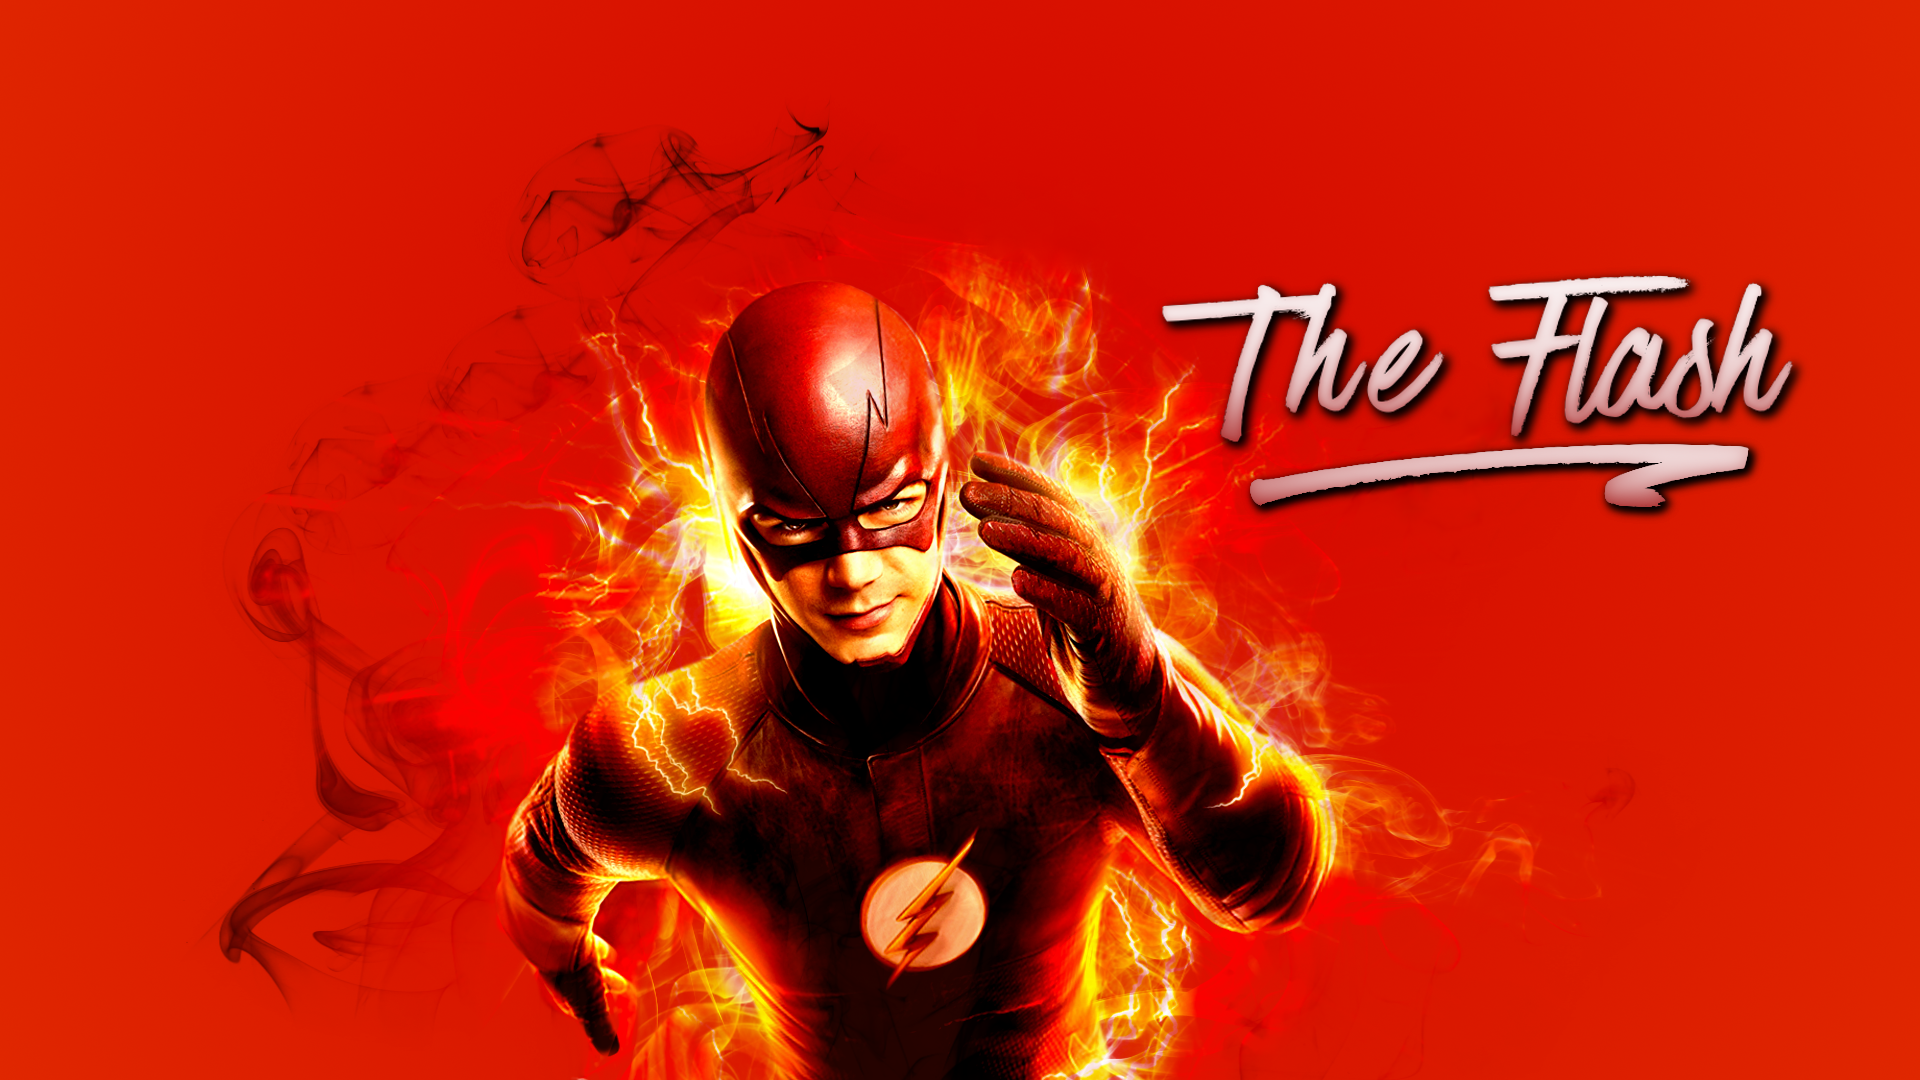 flash wallpaper,fictional character,superhero,graphic design,flash,poster